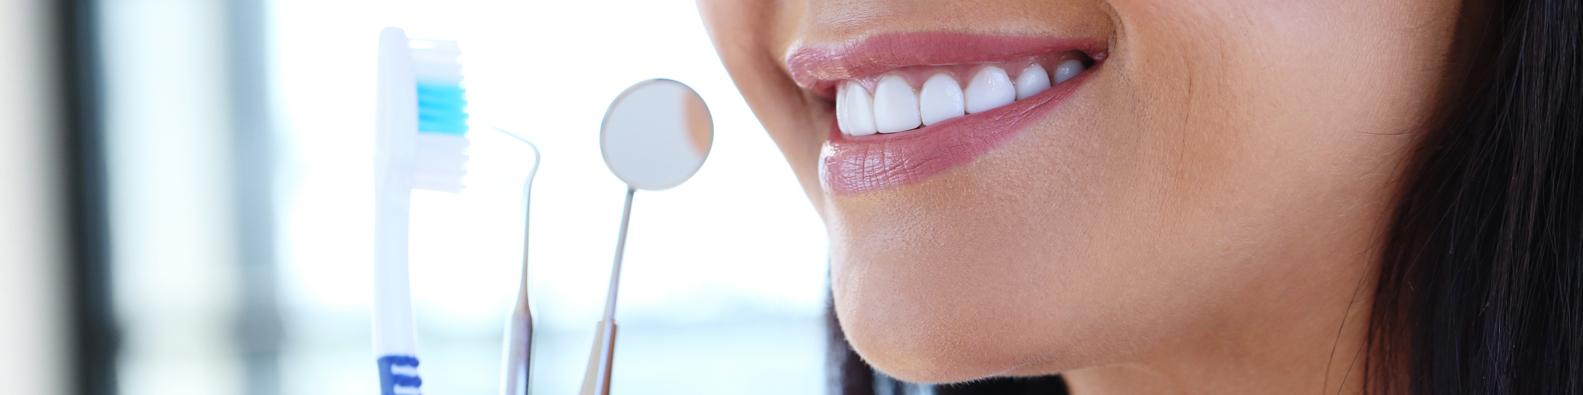 teeth-whitening-banner-img